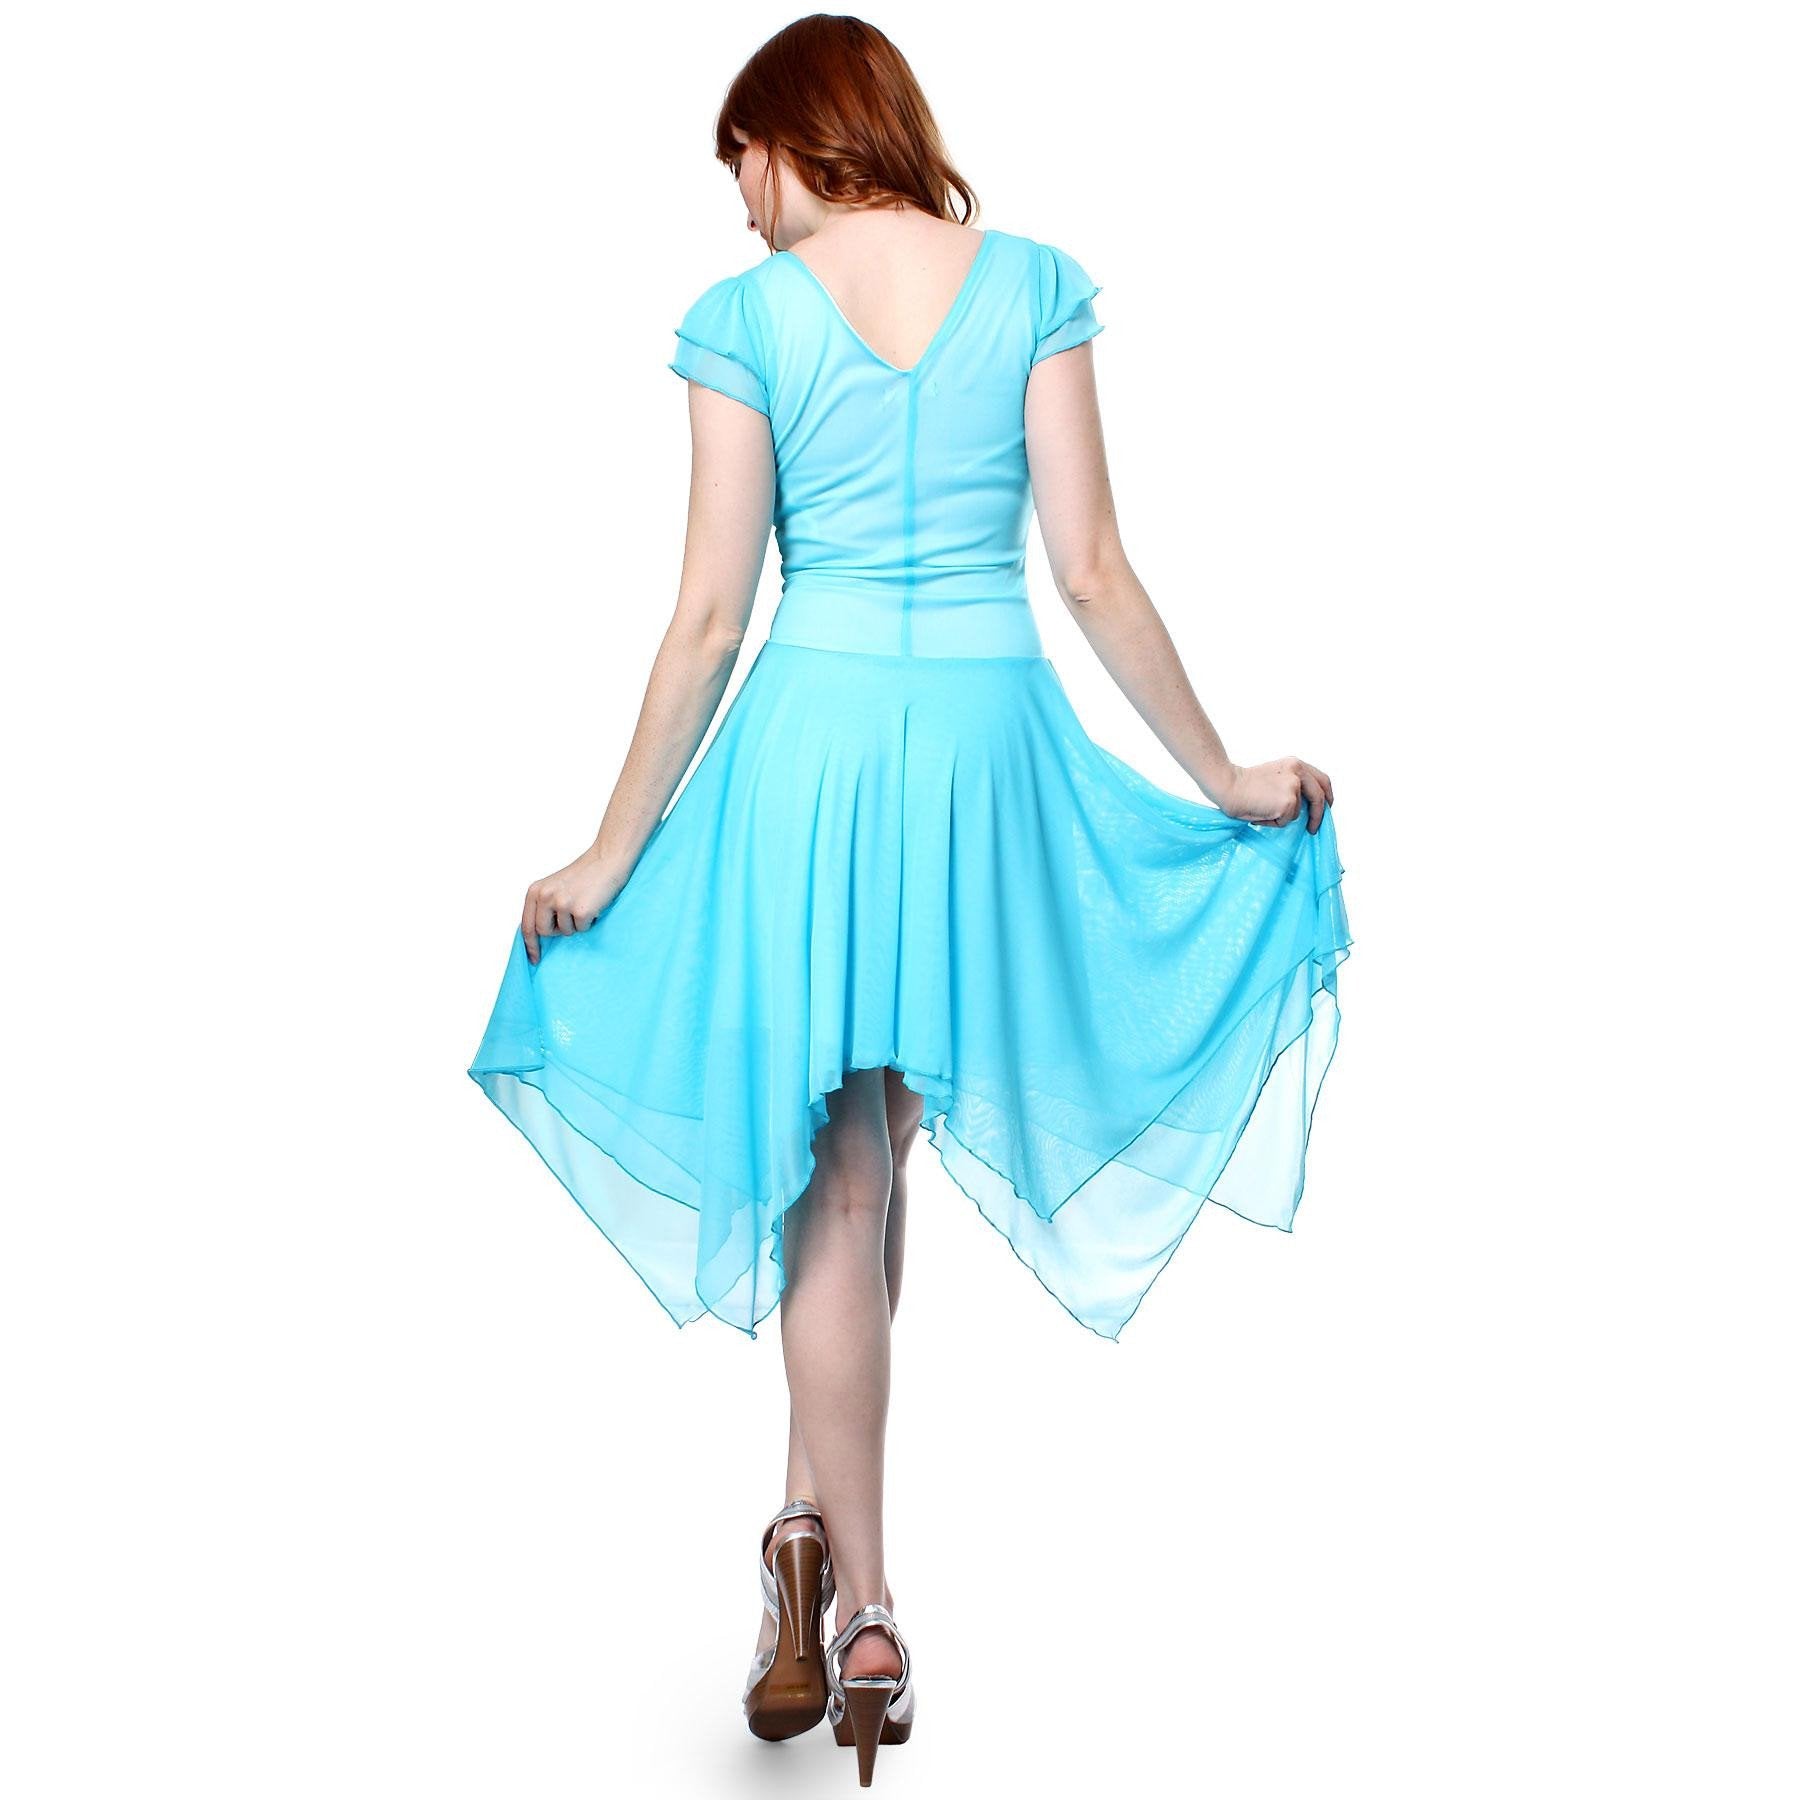 Double Layers Asymmetrical Handkerchief Skirt Dress- More Colors!